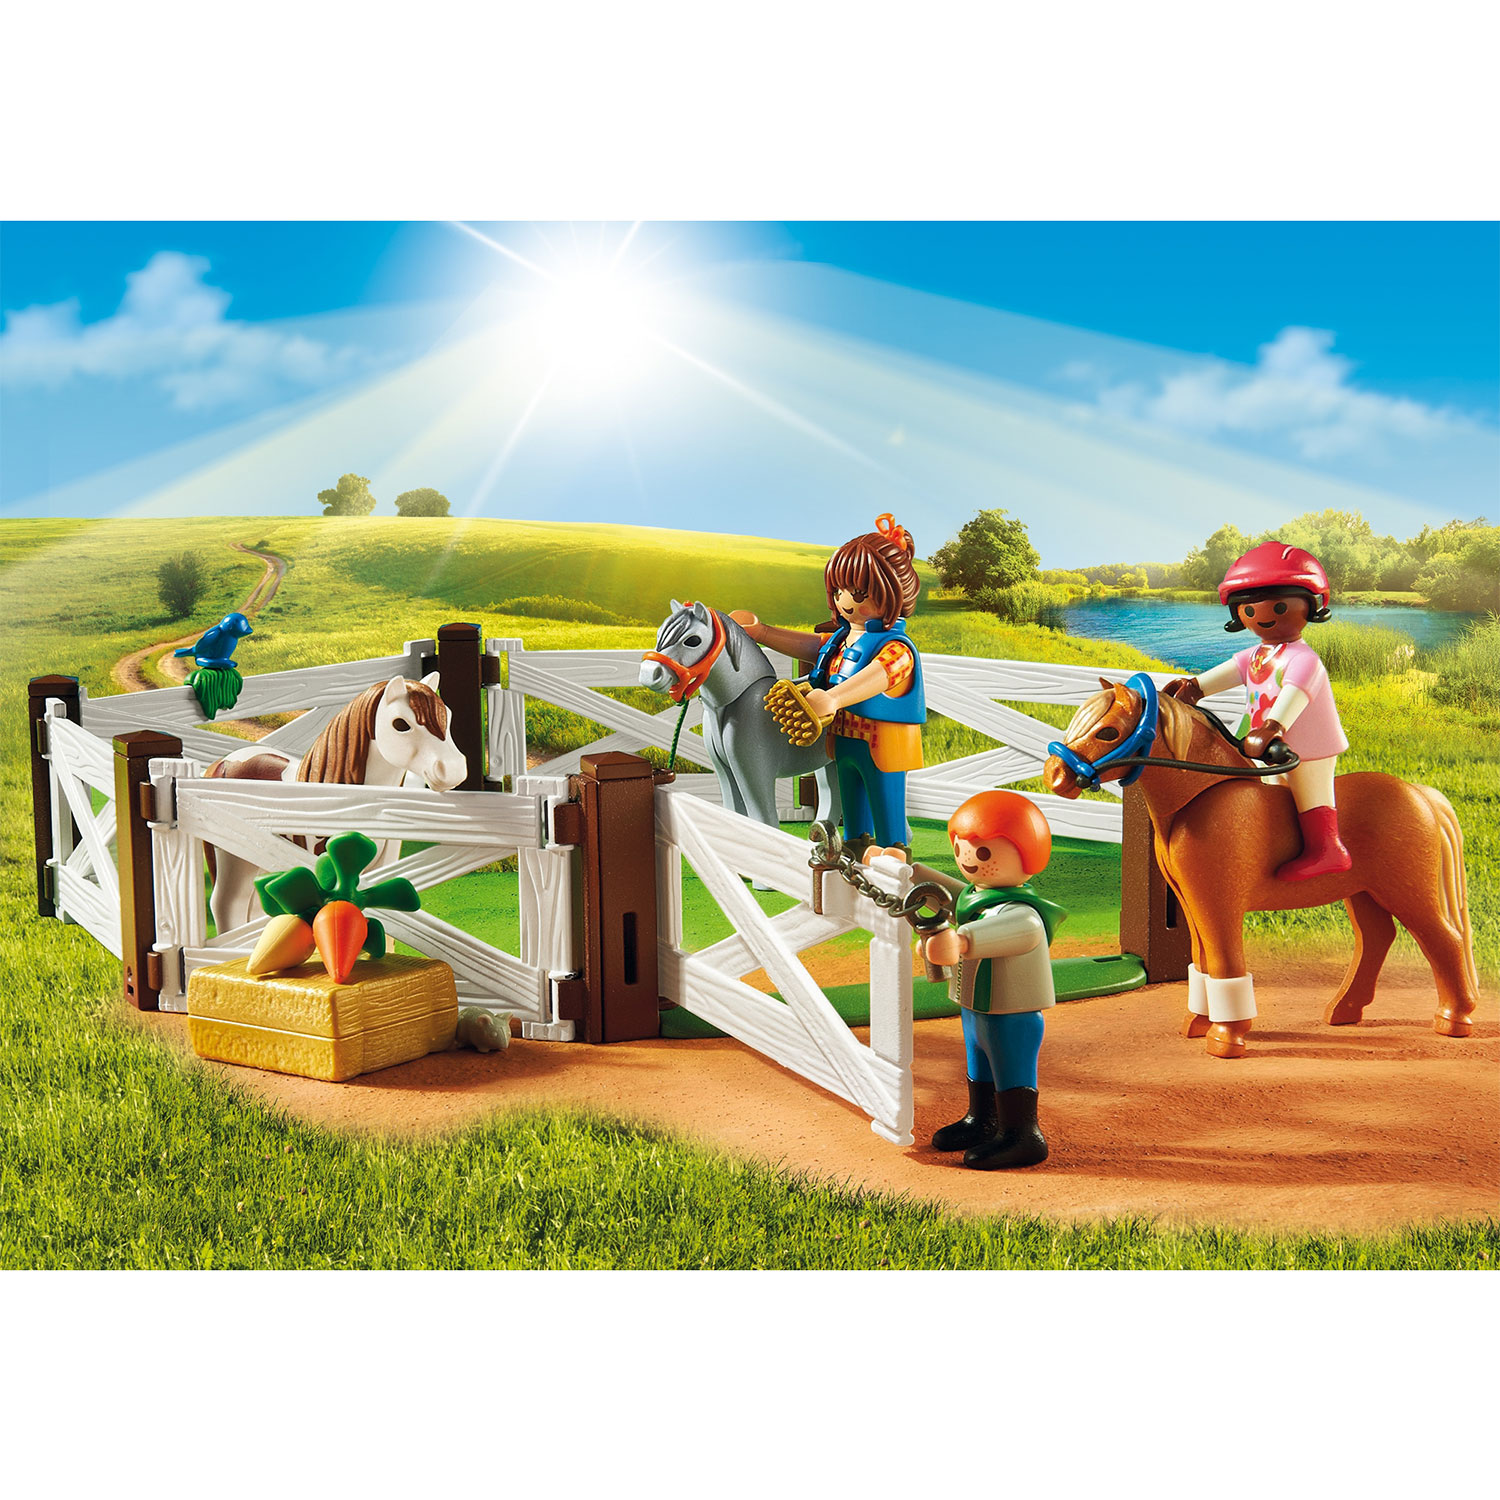 Playmobil Country Pony Park - 6927